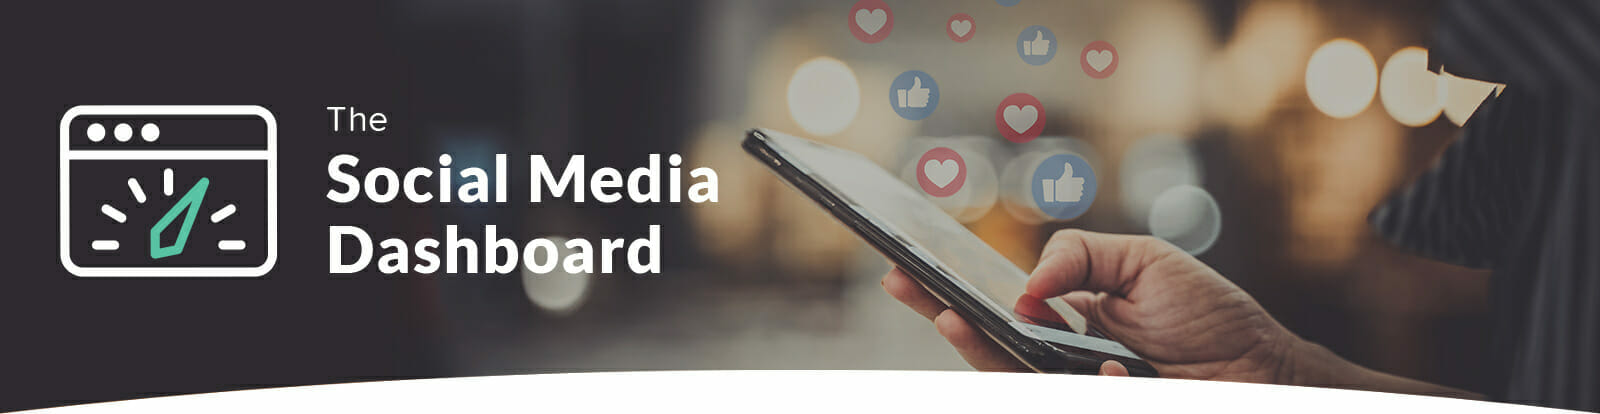 The Social Media Dashboard